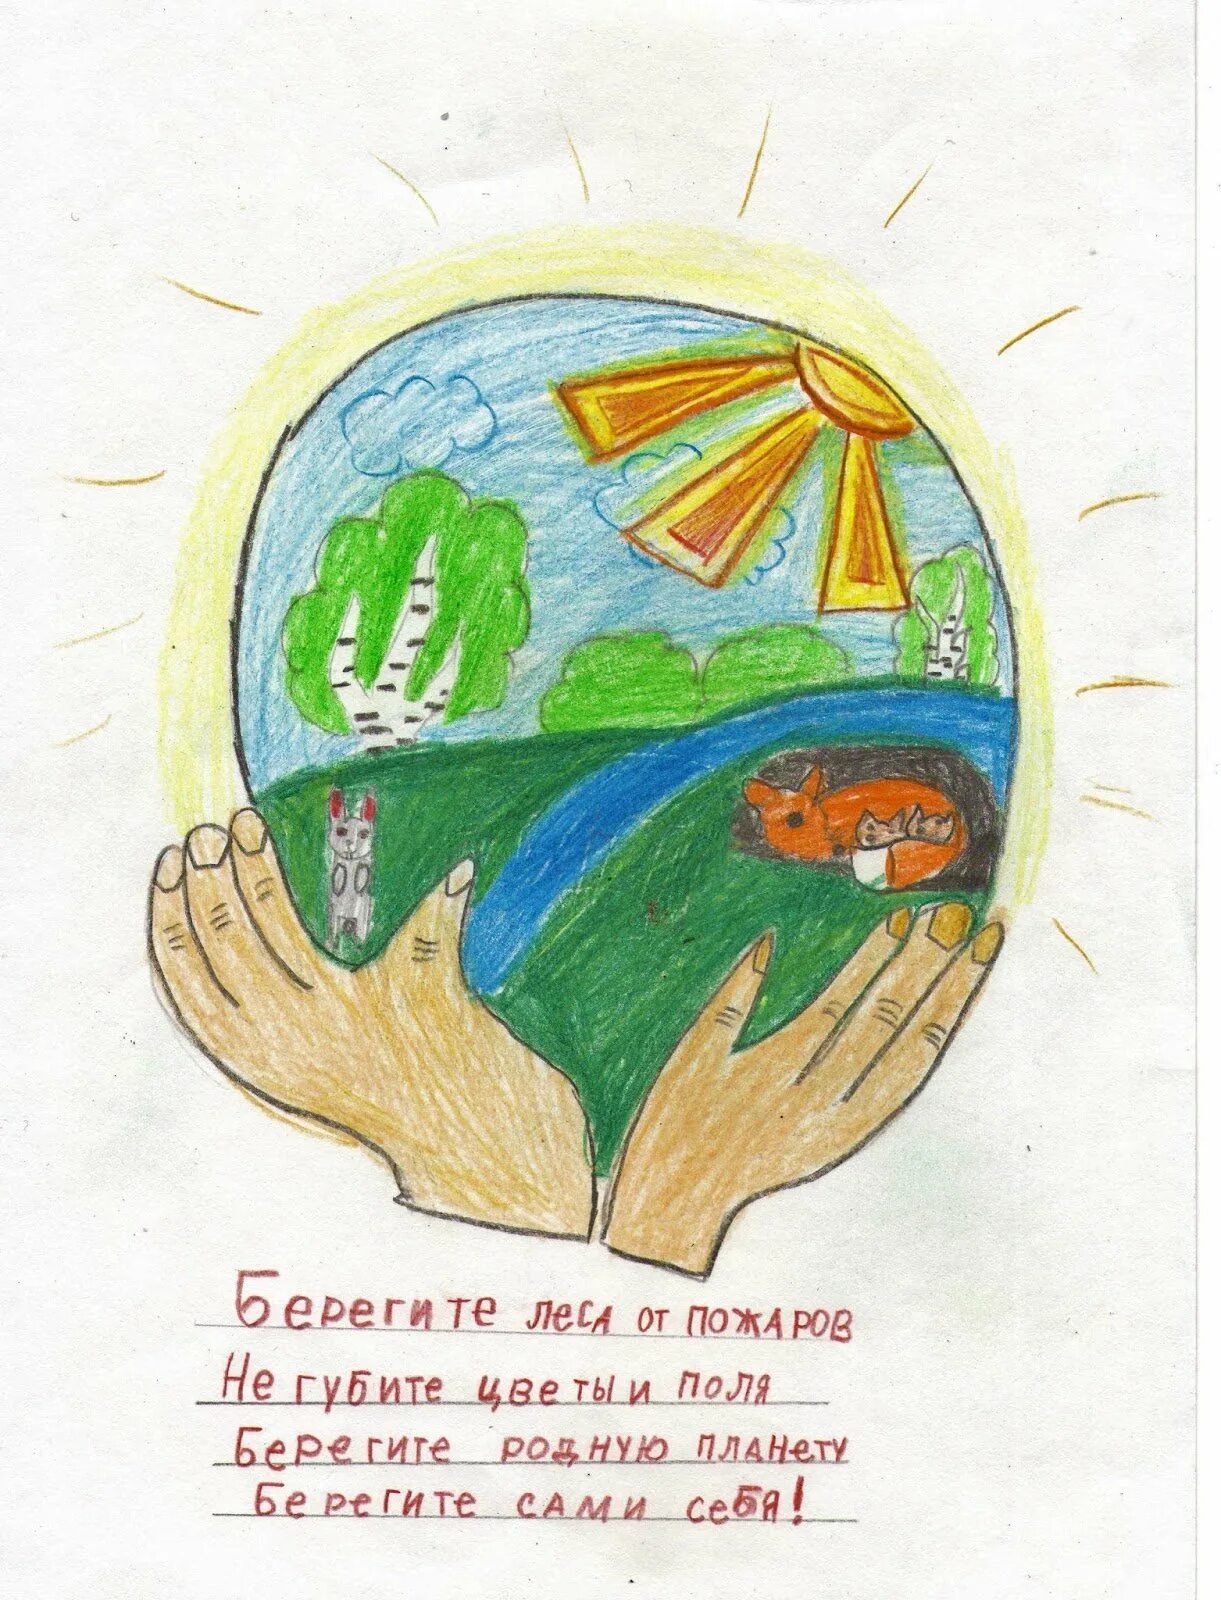 15 Апреля день экологических знаний. 15 Апреля день экологических знаний рисунки. День экологических знаний плакат. 15 апреля день экологических знаний для детей